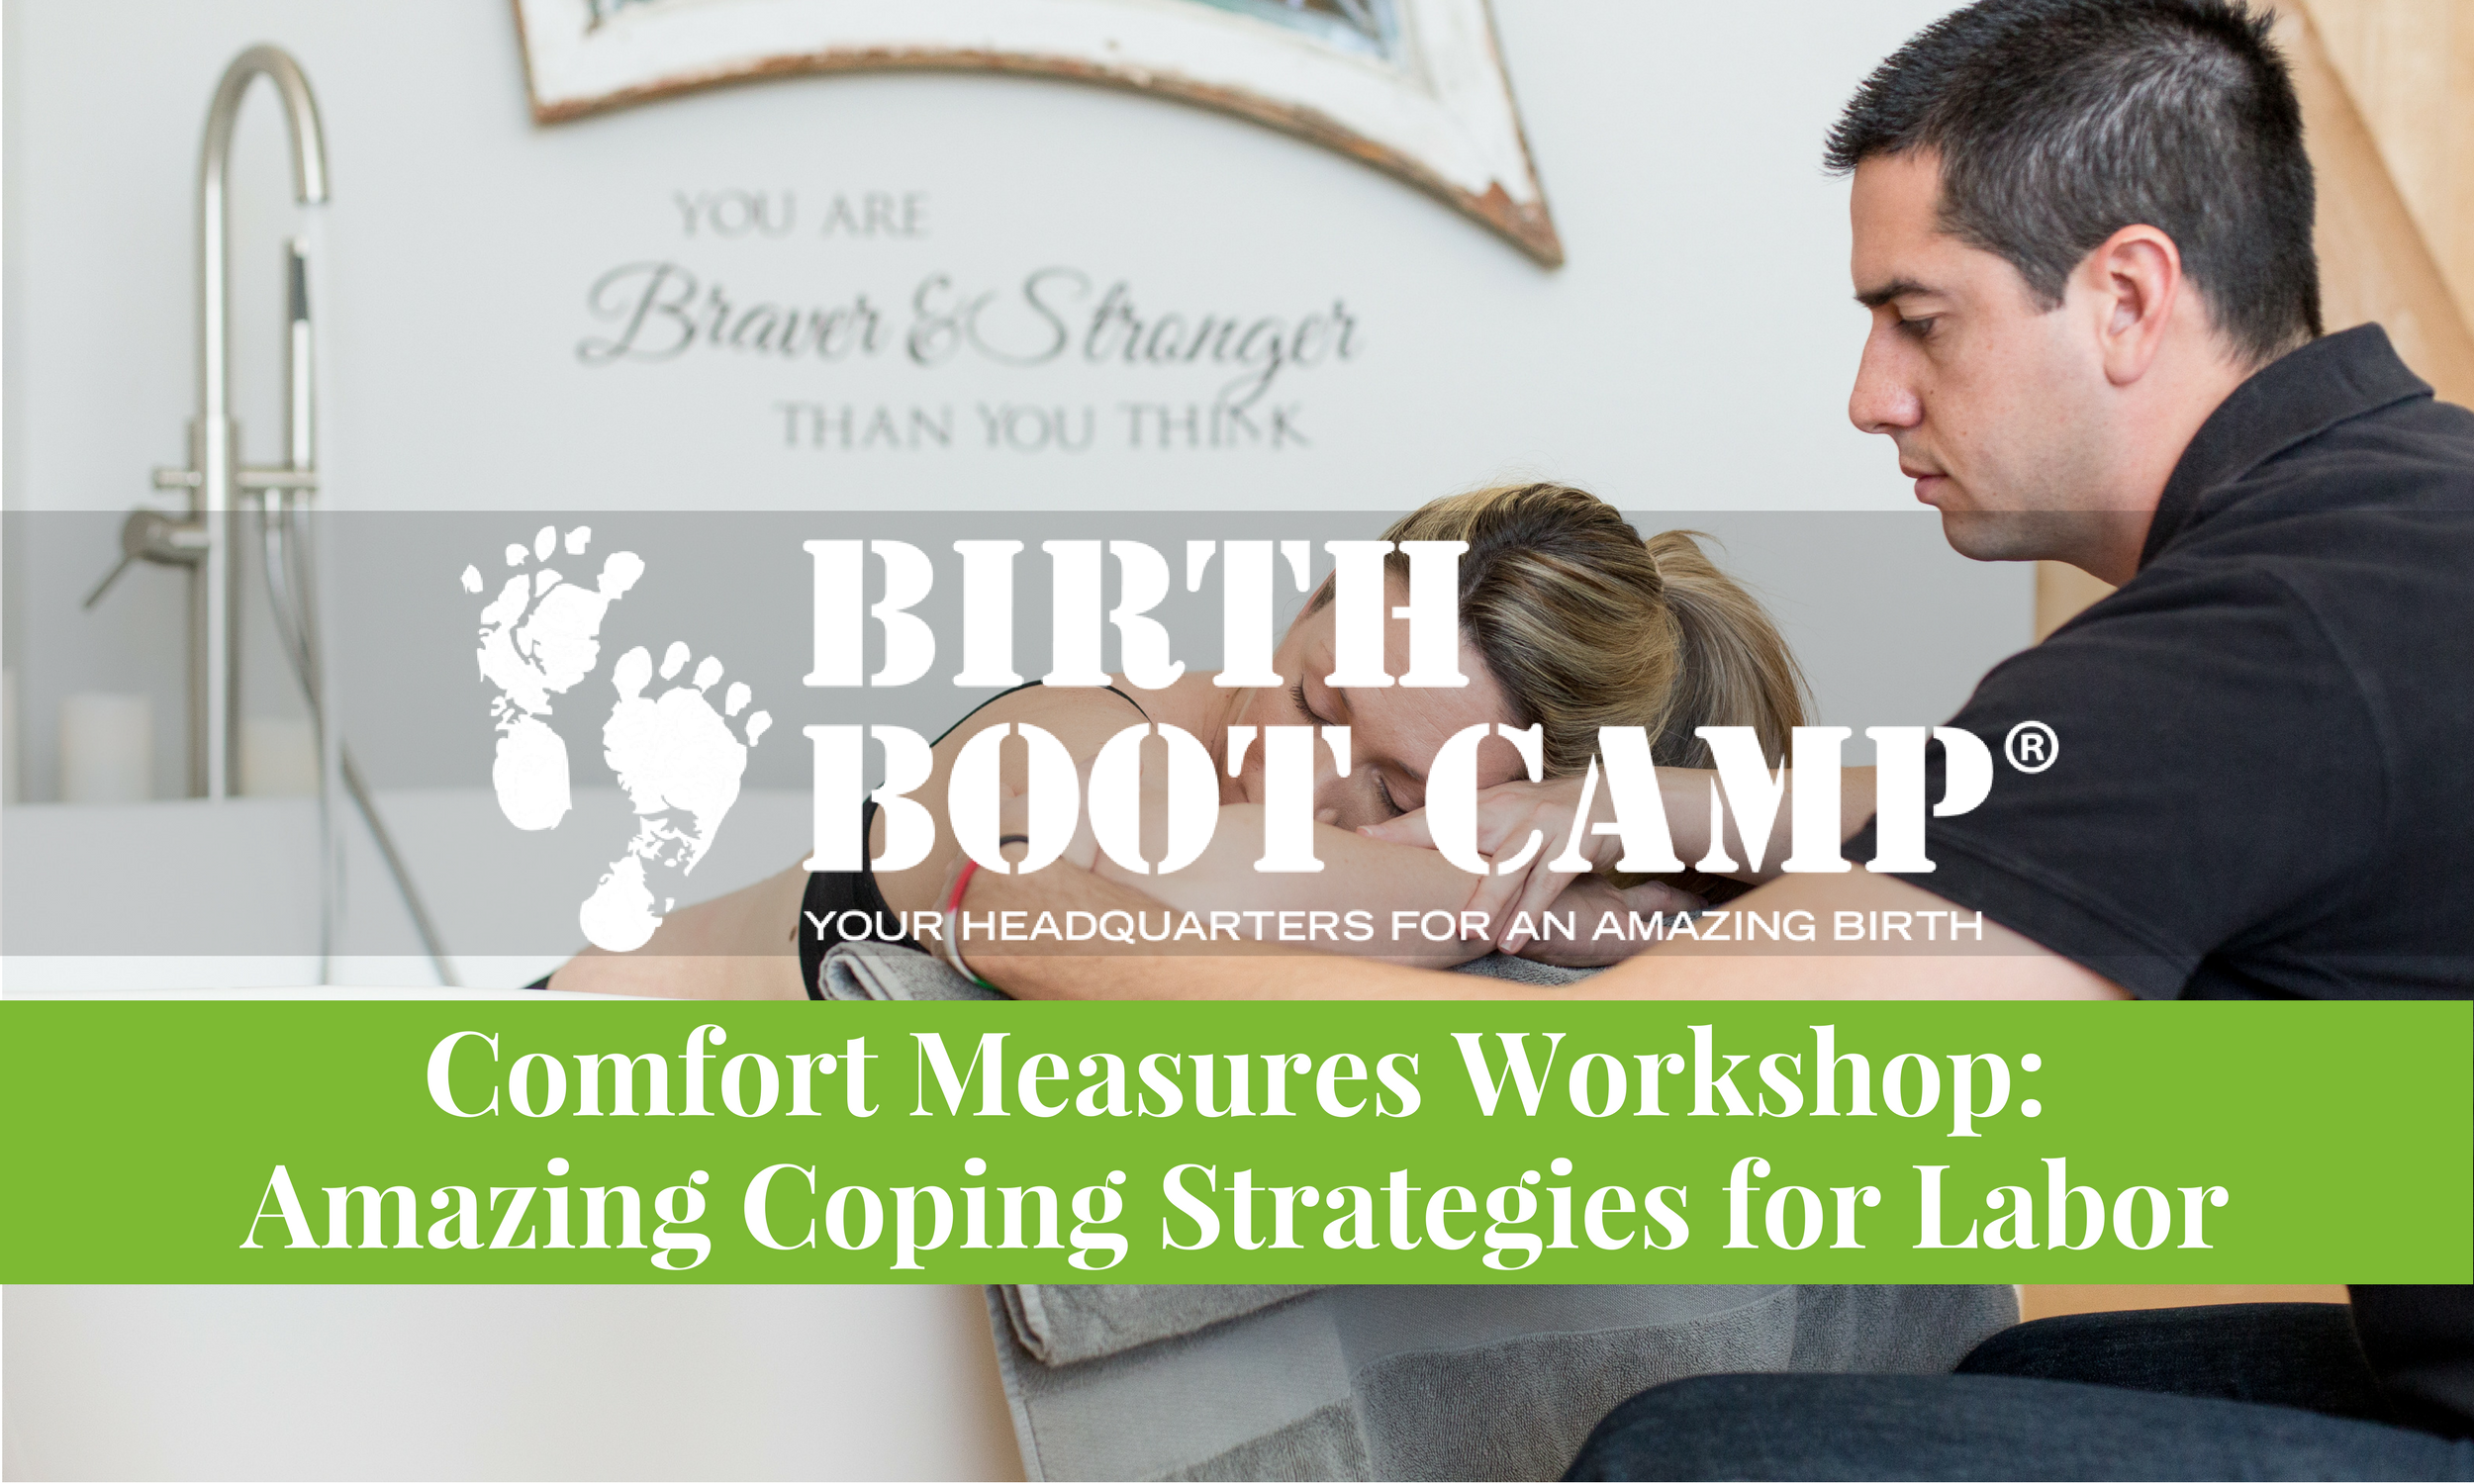 Birth Boot Camp Comfort Measures Online Class